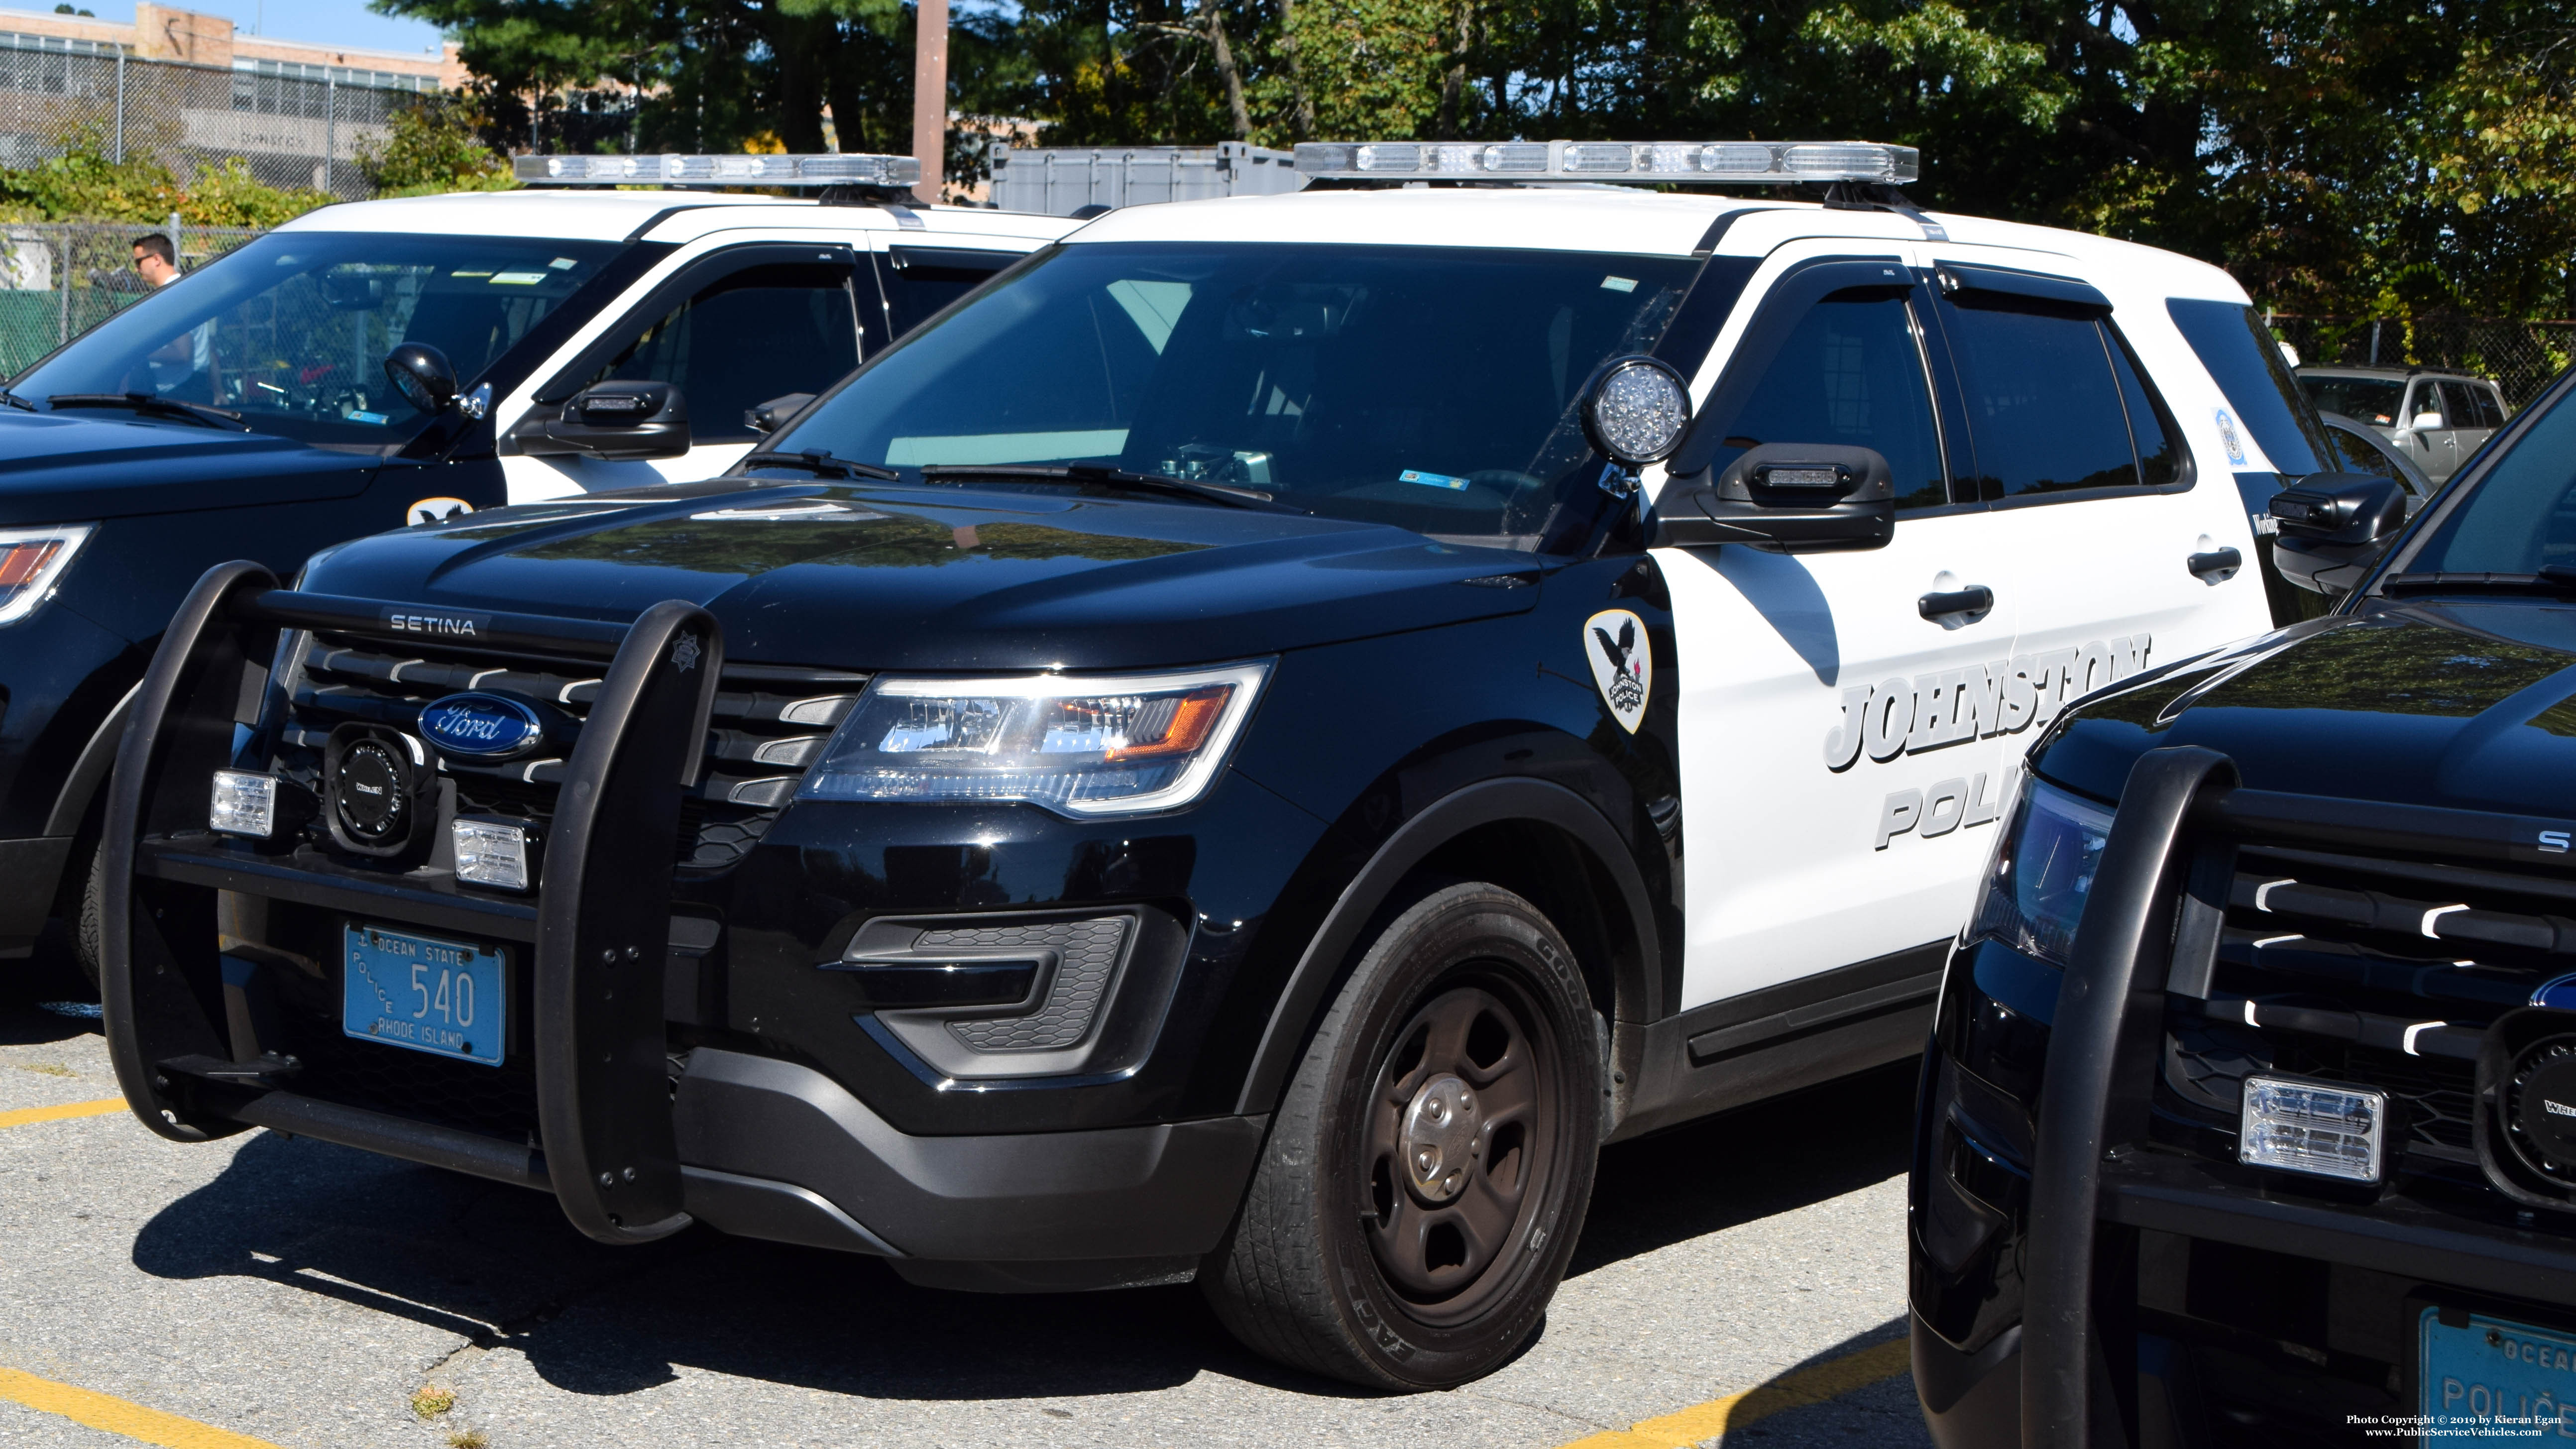 A photo  of Johnston Police
            Cruiser 540, a 2019 Ford Police Interceptor Utility             taken by Kieran Egan